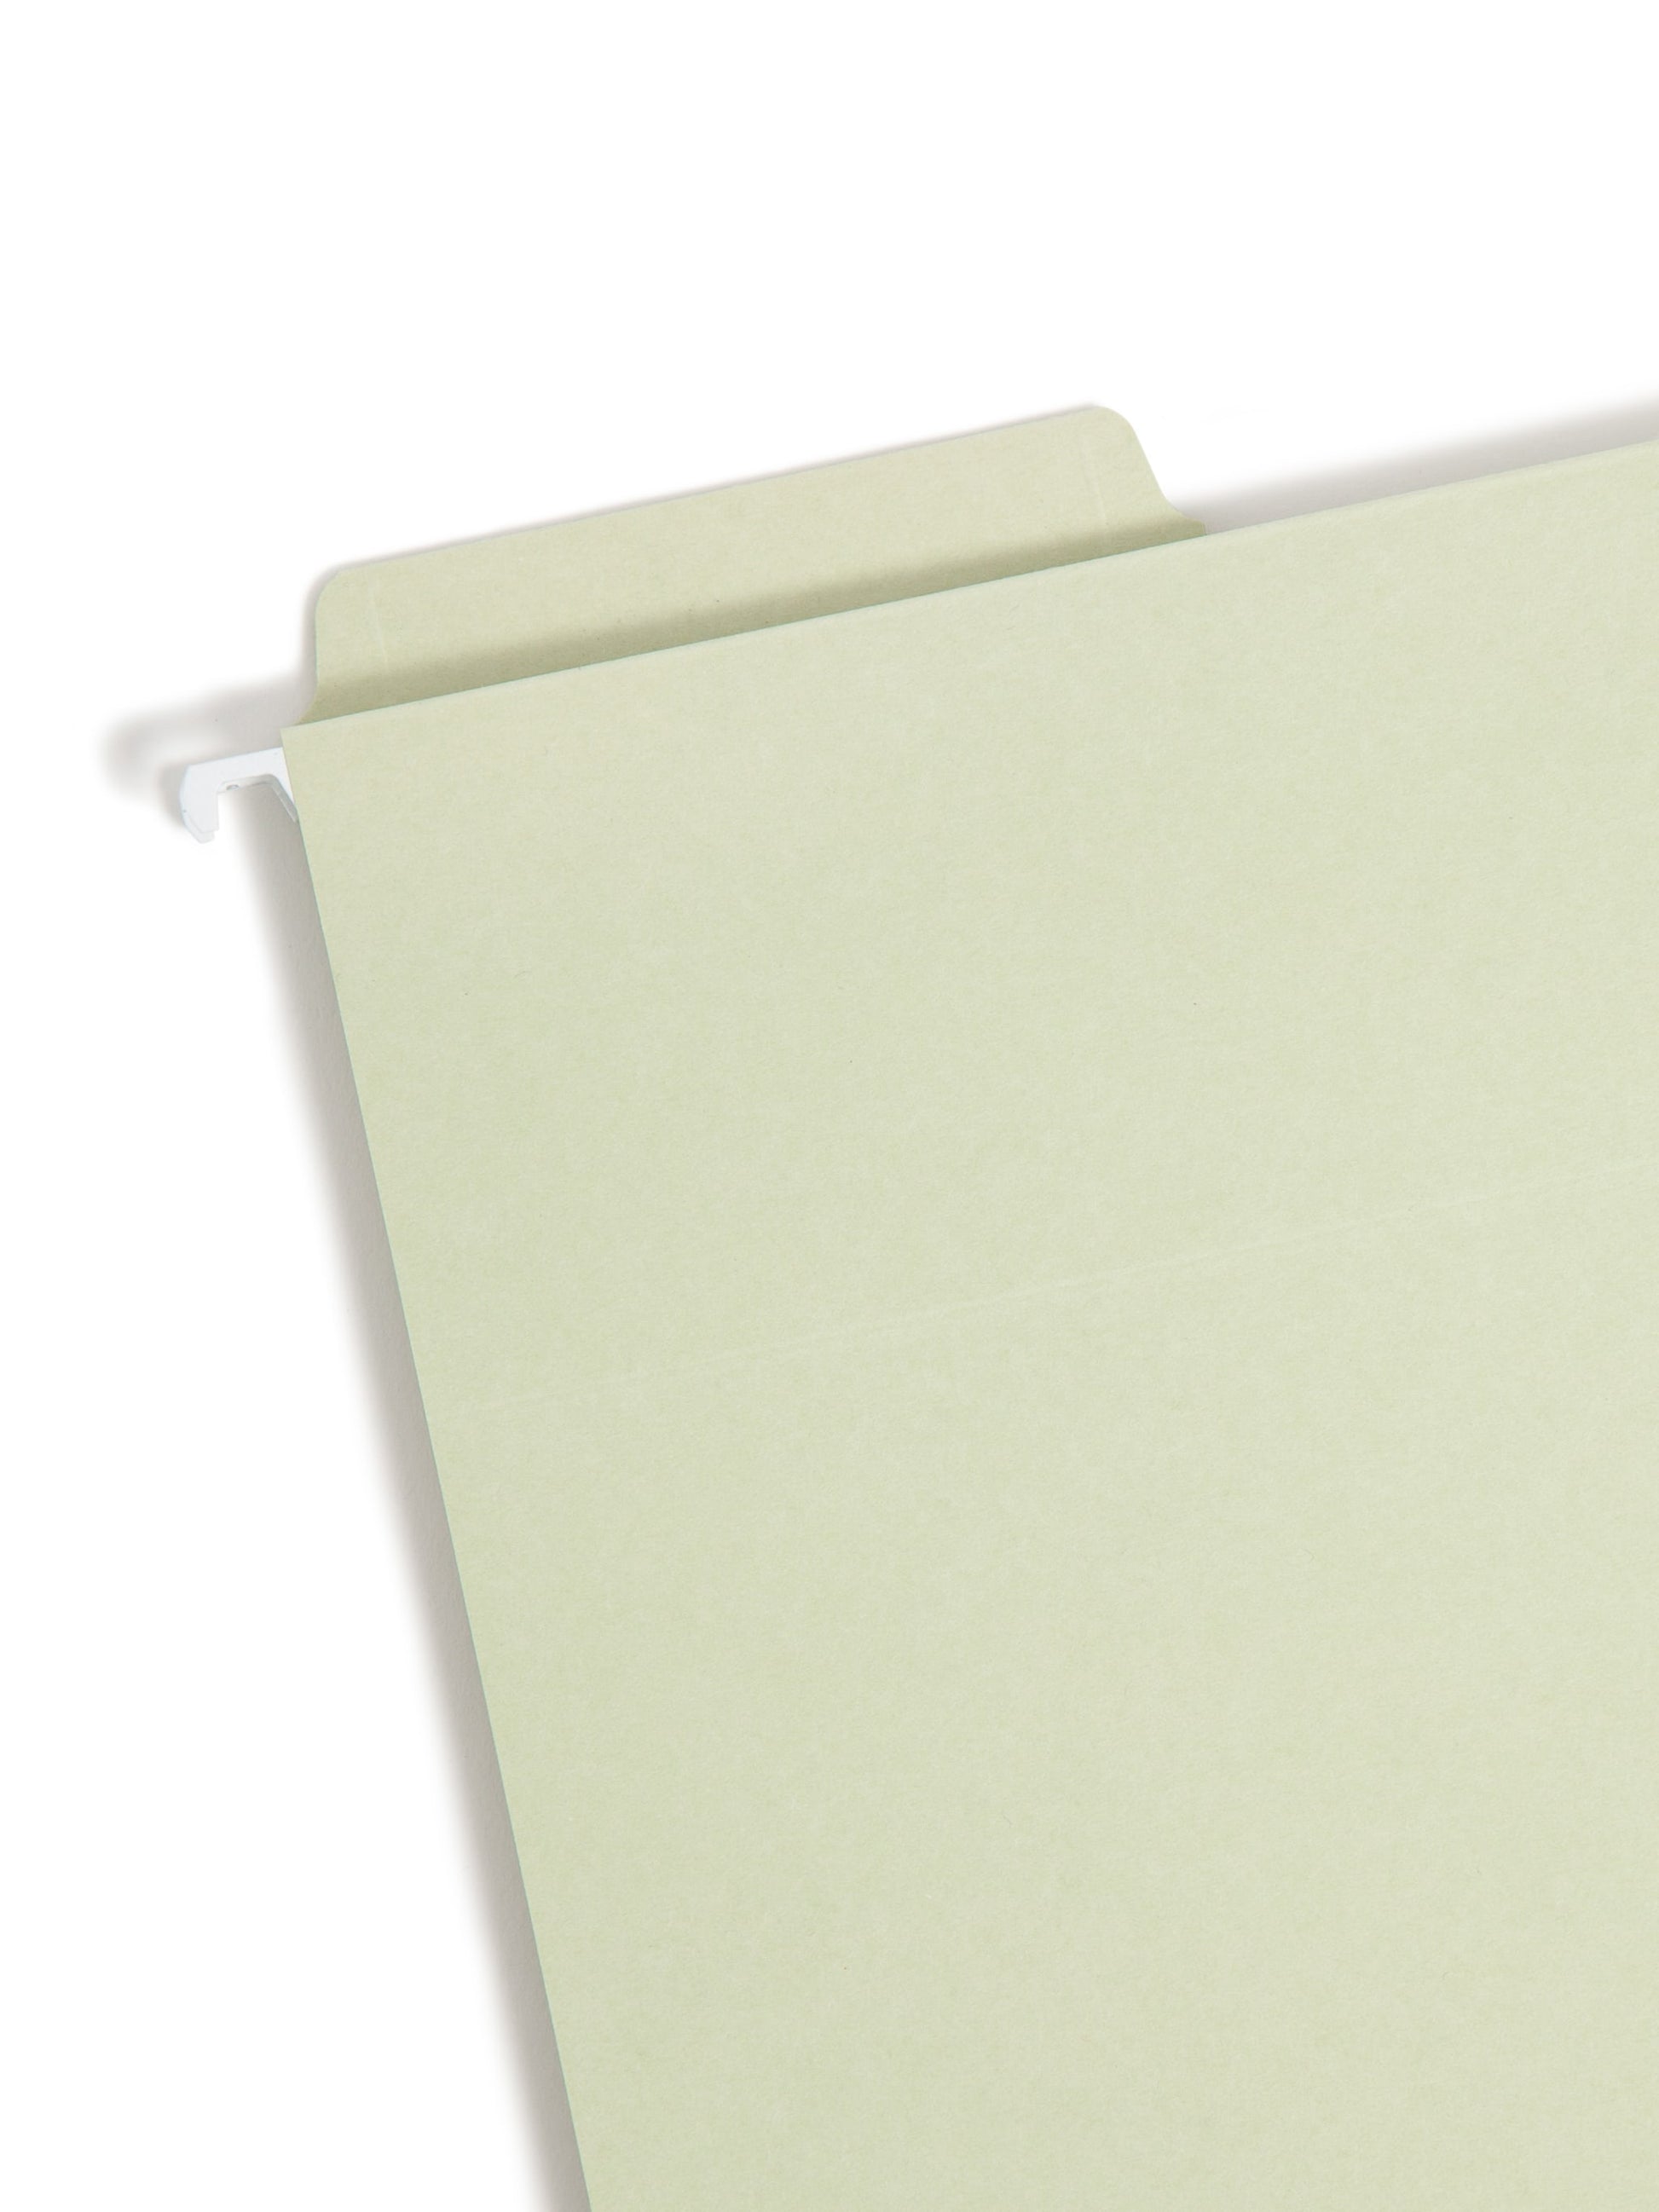 FasTab® Hanging Box Bottom File Folders, Moss Green Color, Letter Size, Set of 20, 086486642019